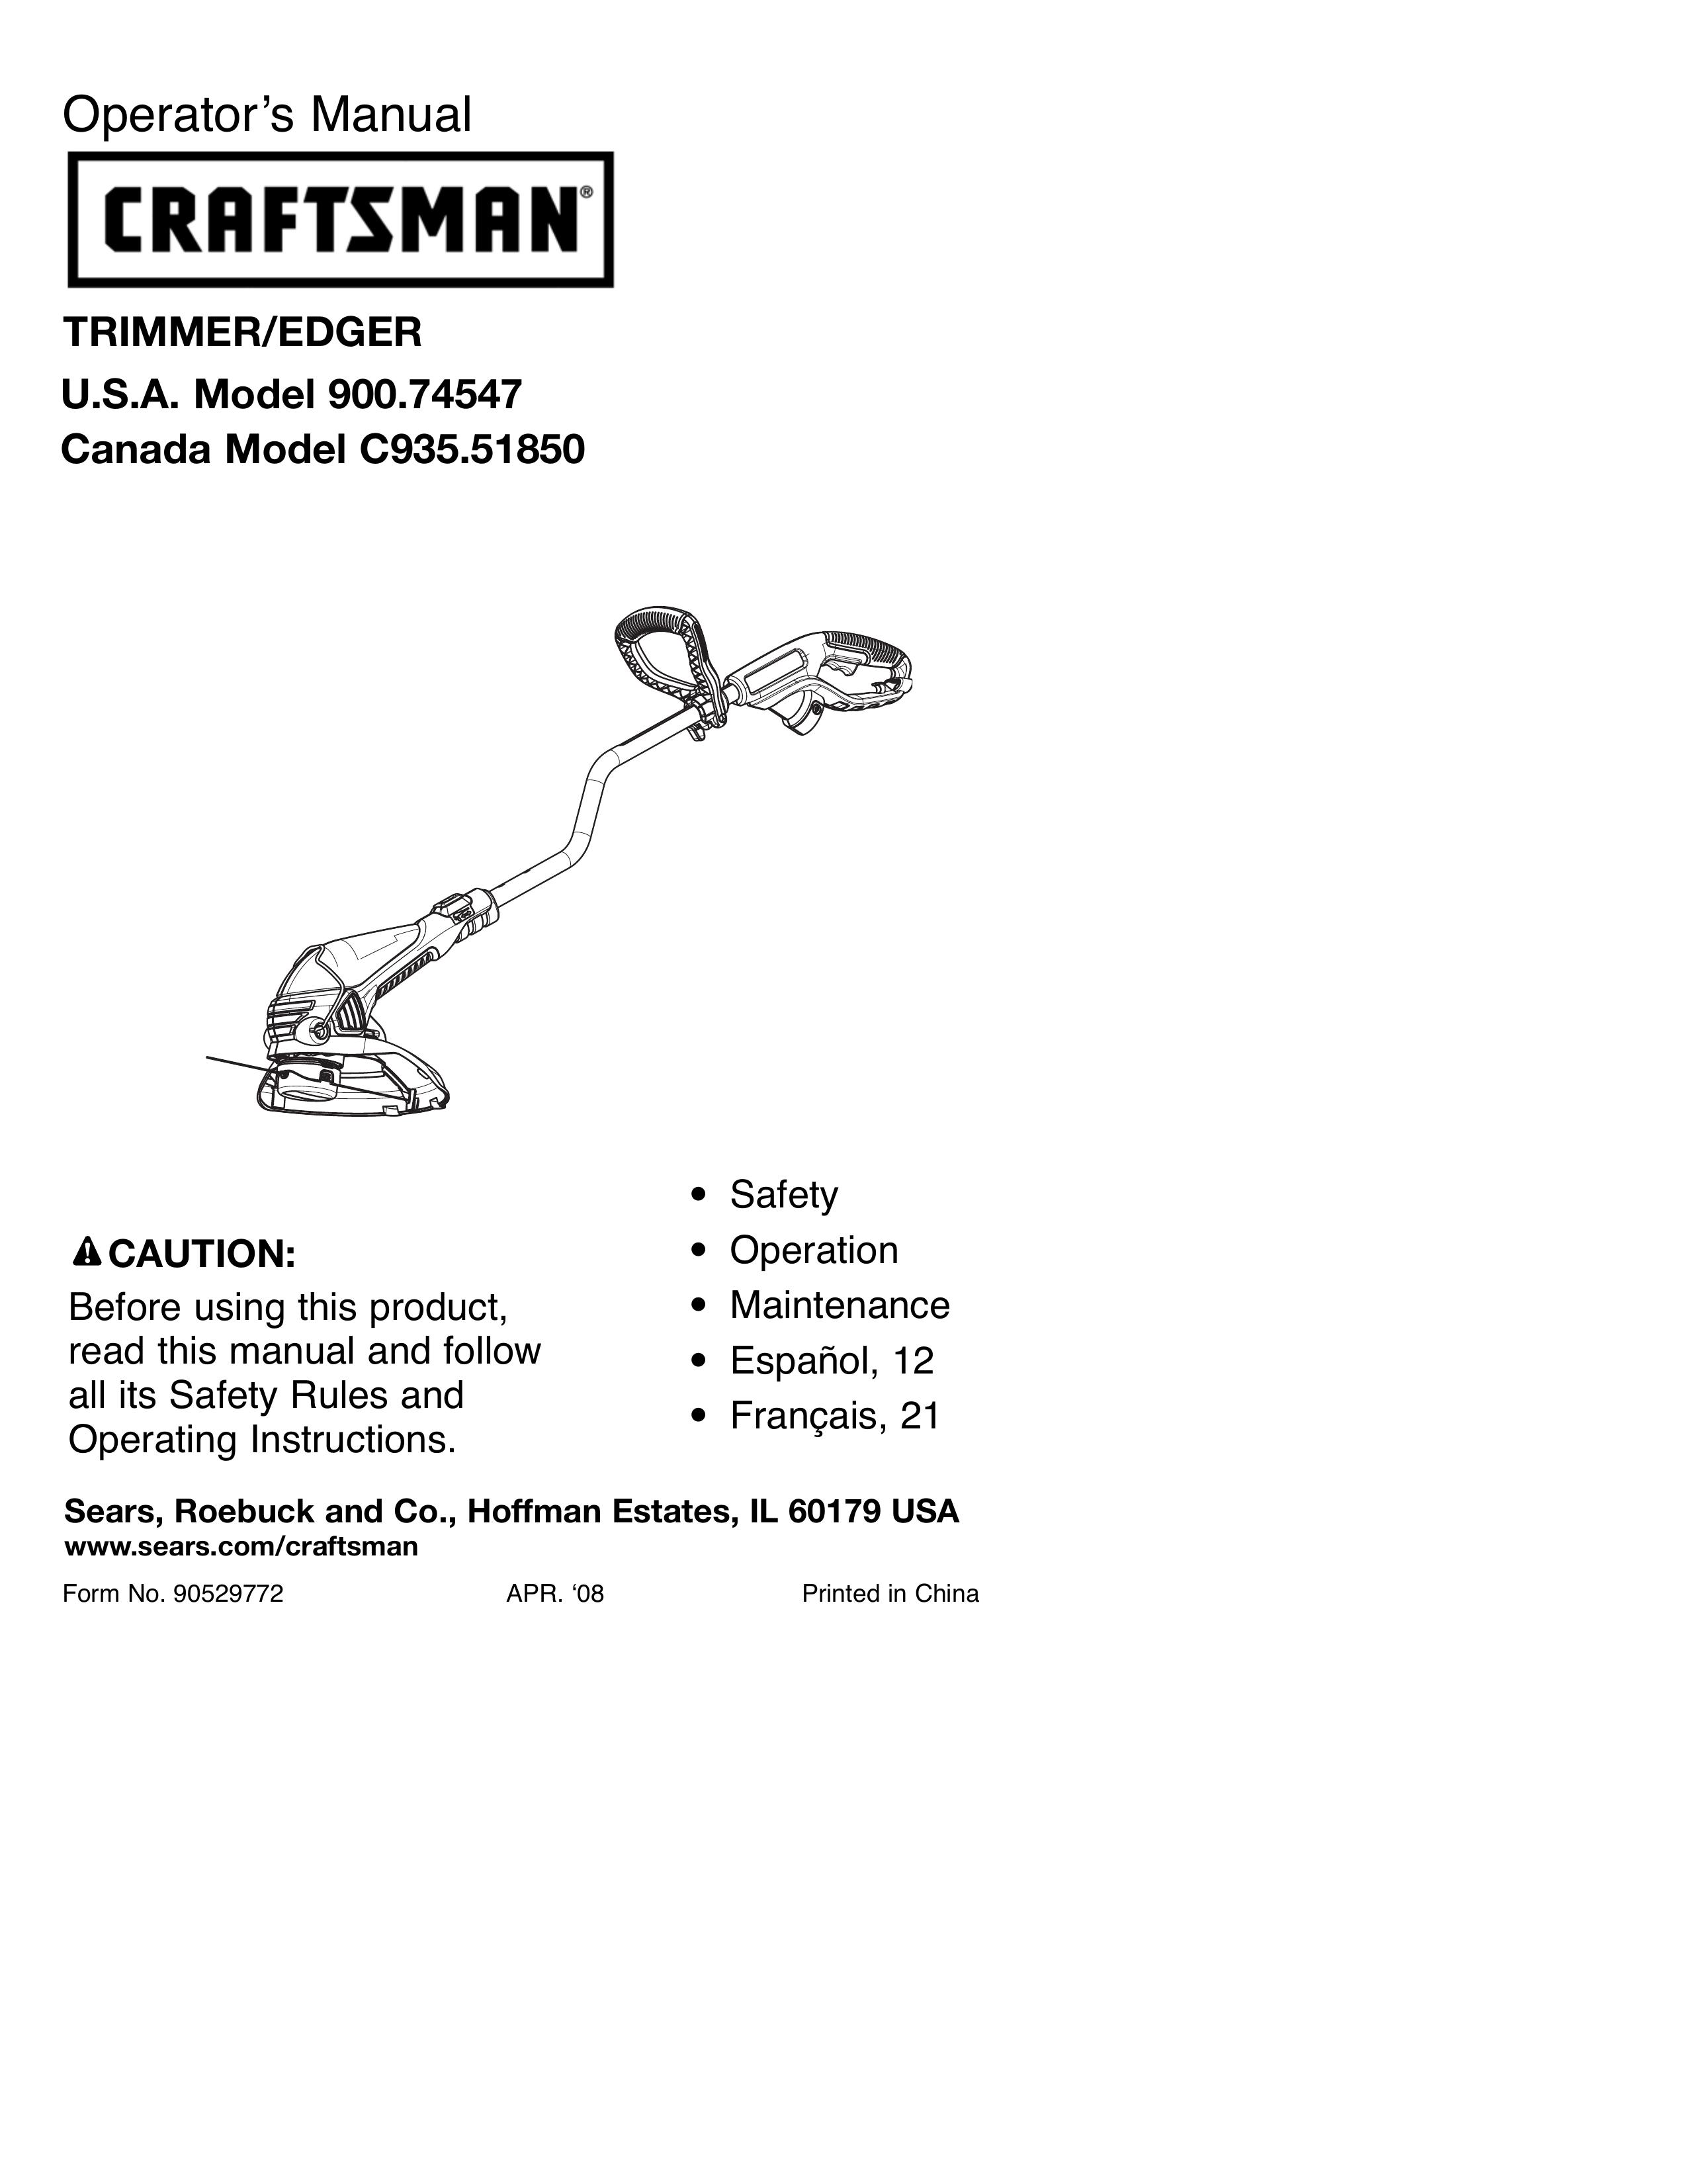 Craftsman C935.51850 Edger User Manual